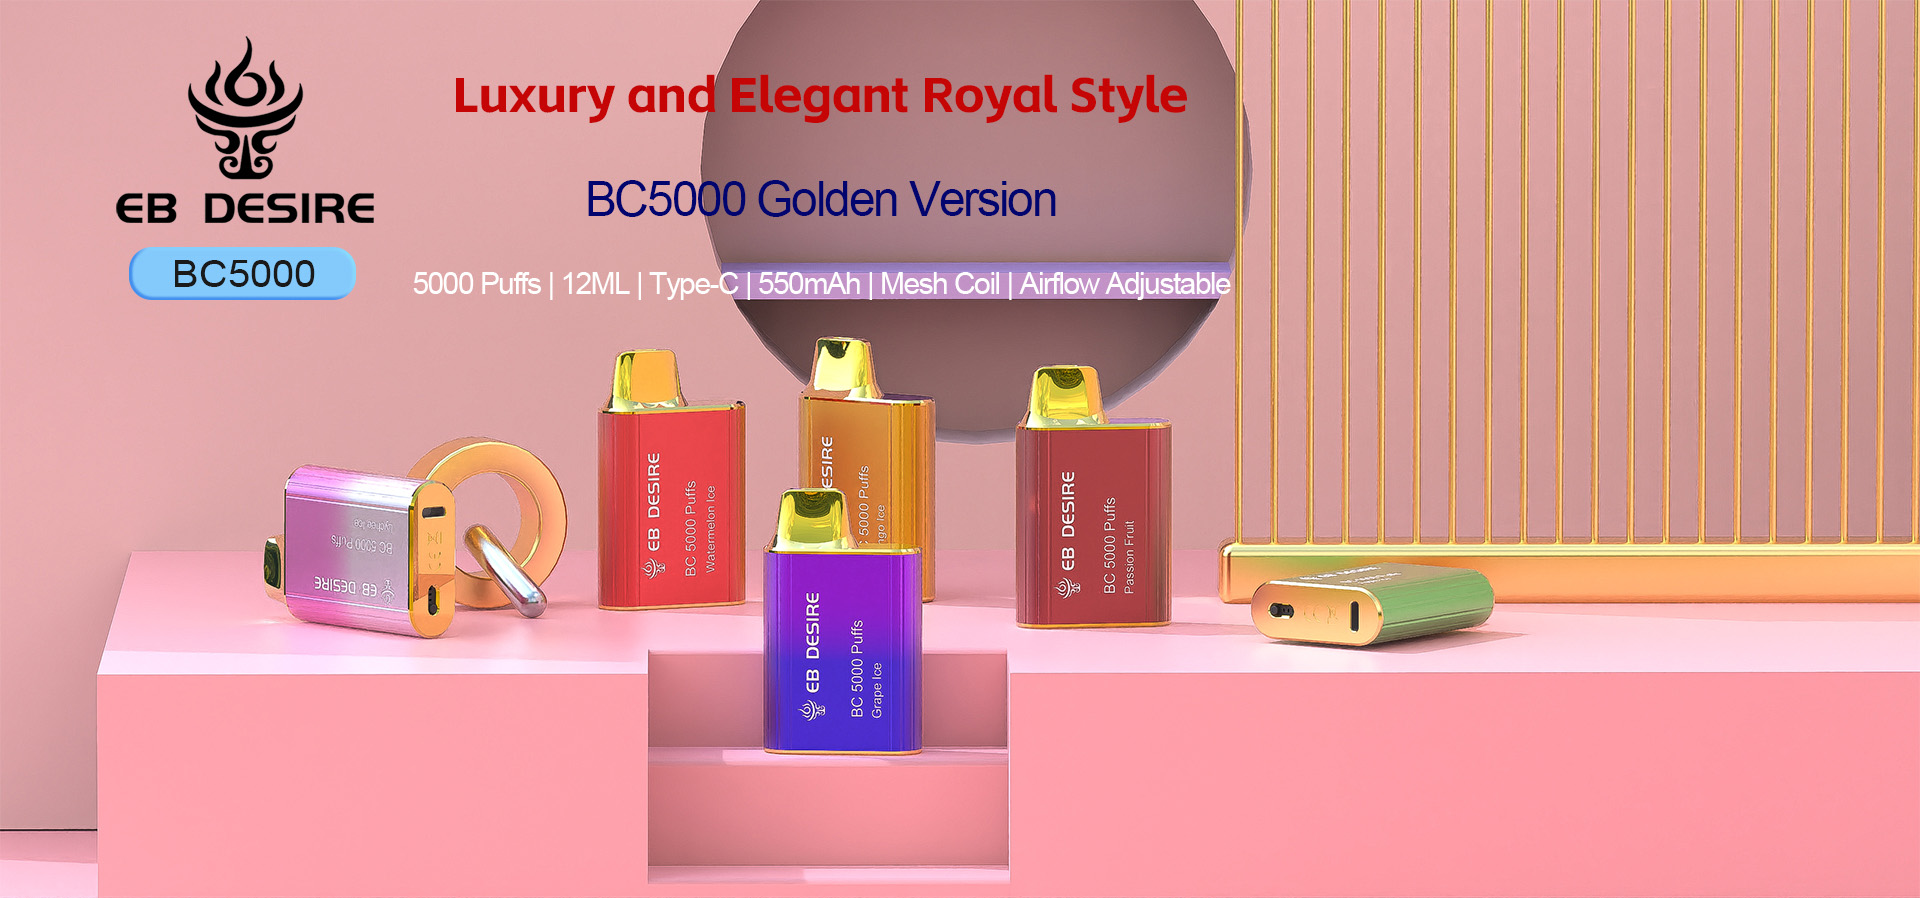 EB DESIRE BC5000 Vape Pakai Pakai Emas Mewah dan Elegan (1)